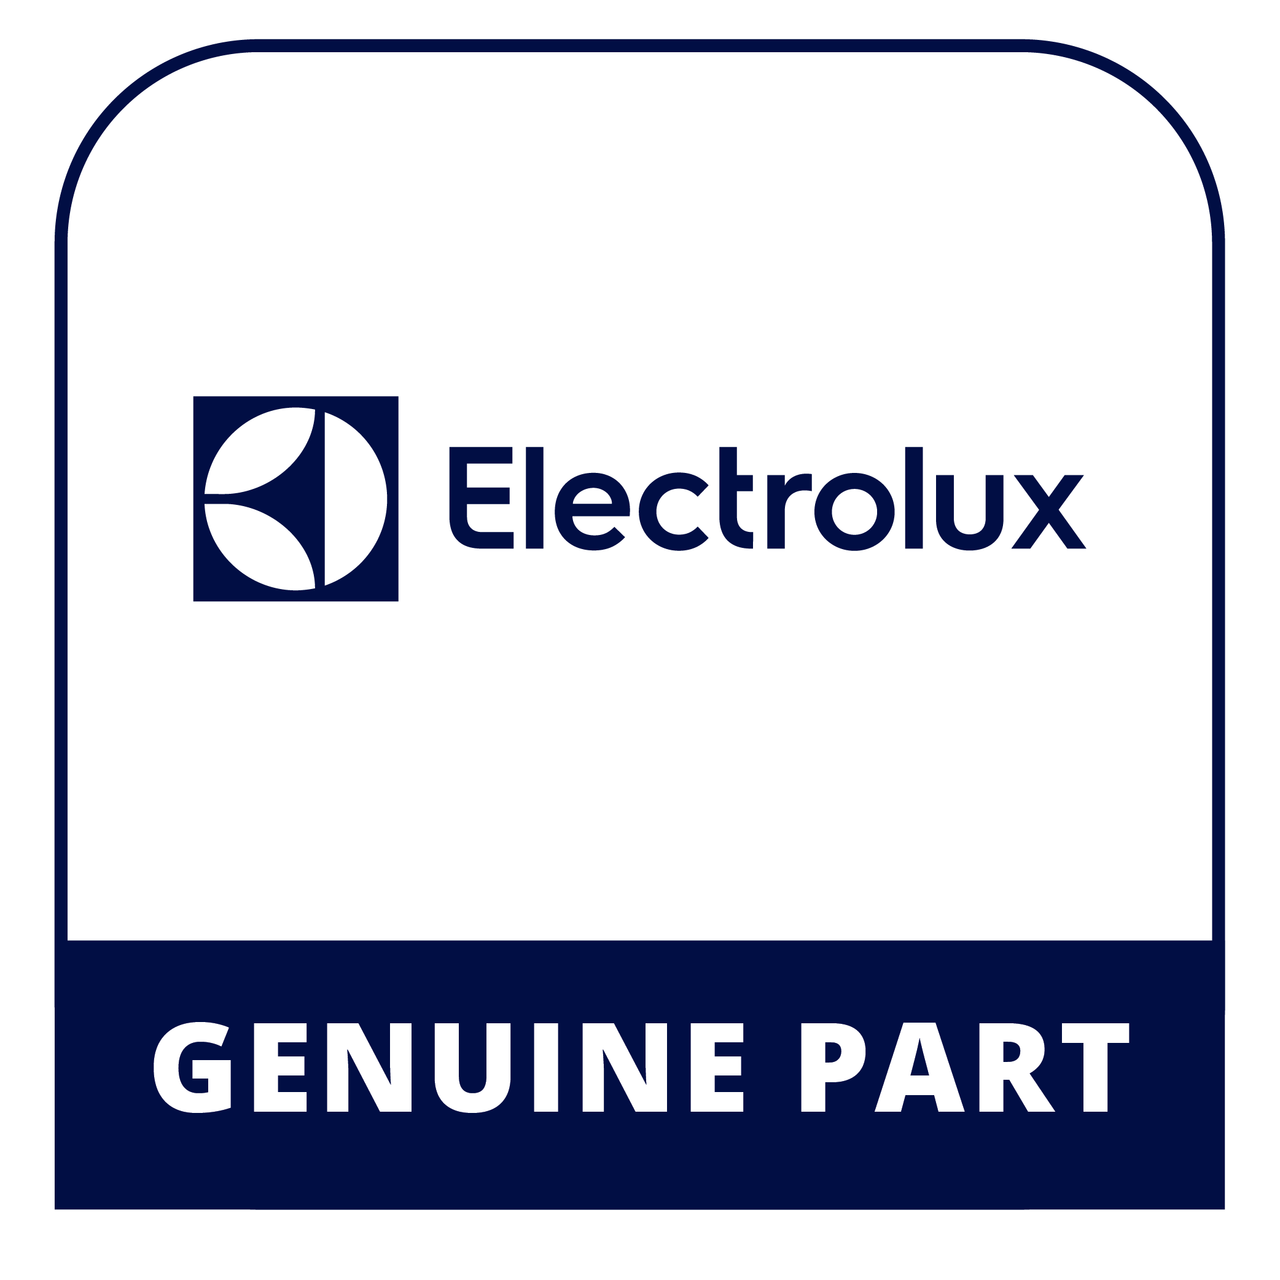 Frigidaire - Electrolux 5304500310 Ignitor/Orifice Ass - Genuine Electrolux Part